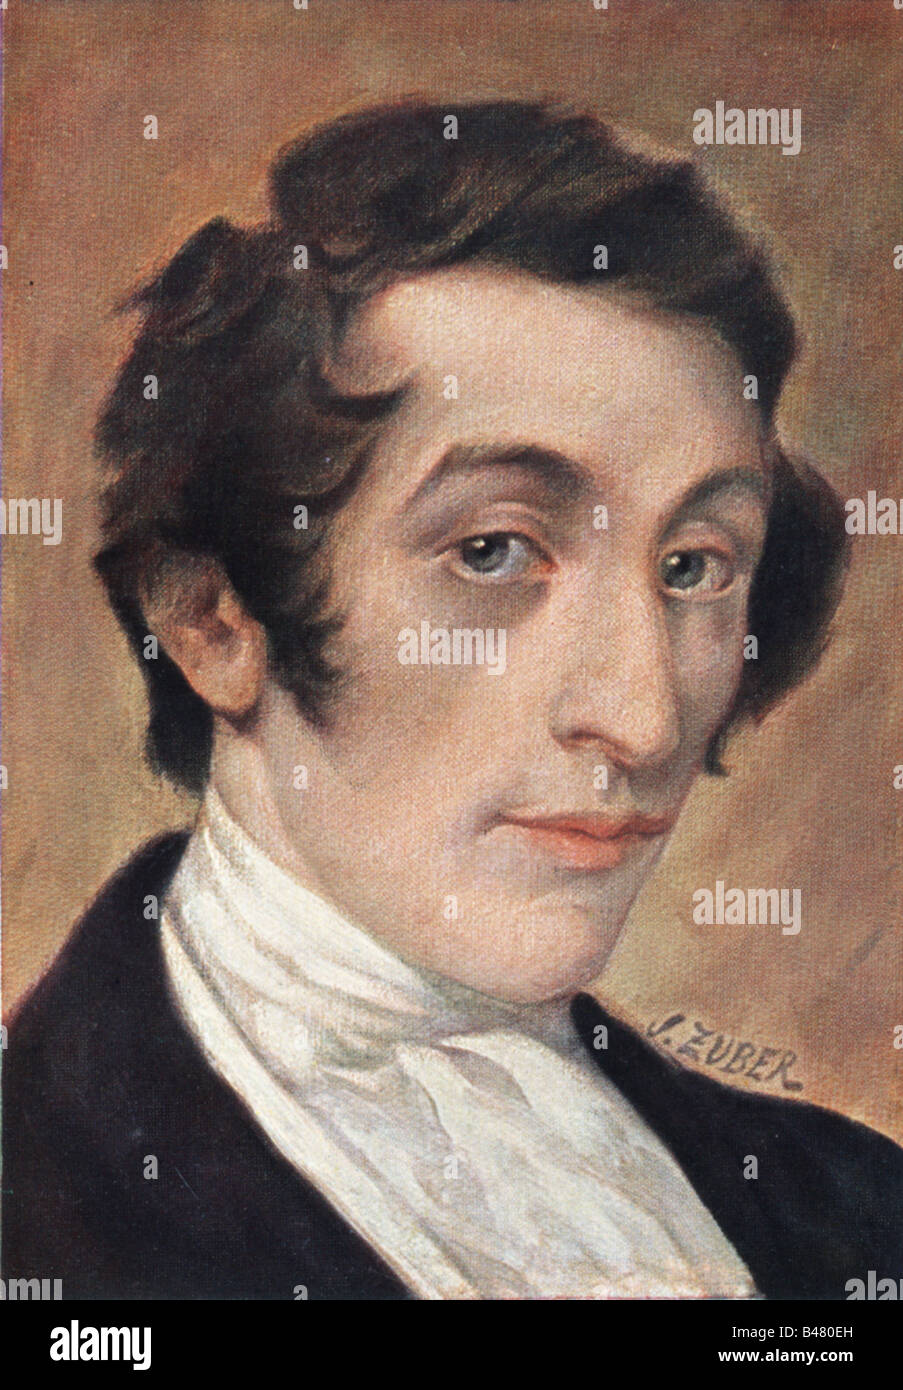 Weber, Carl Maria von, 18.11.1786 - 5.6.1826, German composer, portrait, after painting, Stock Photo